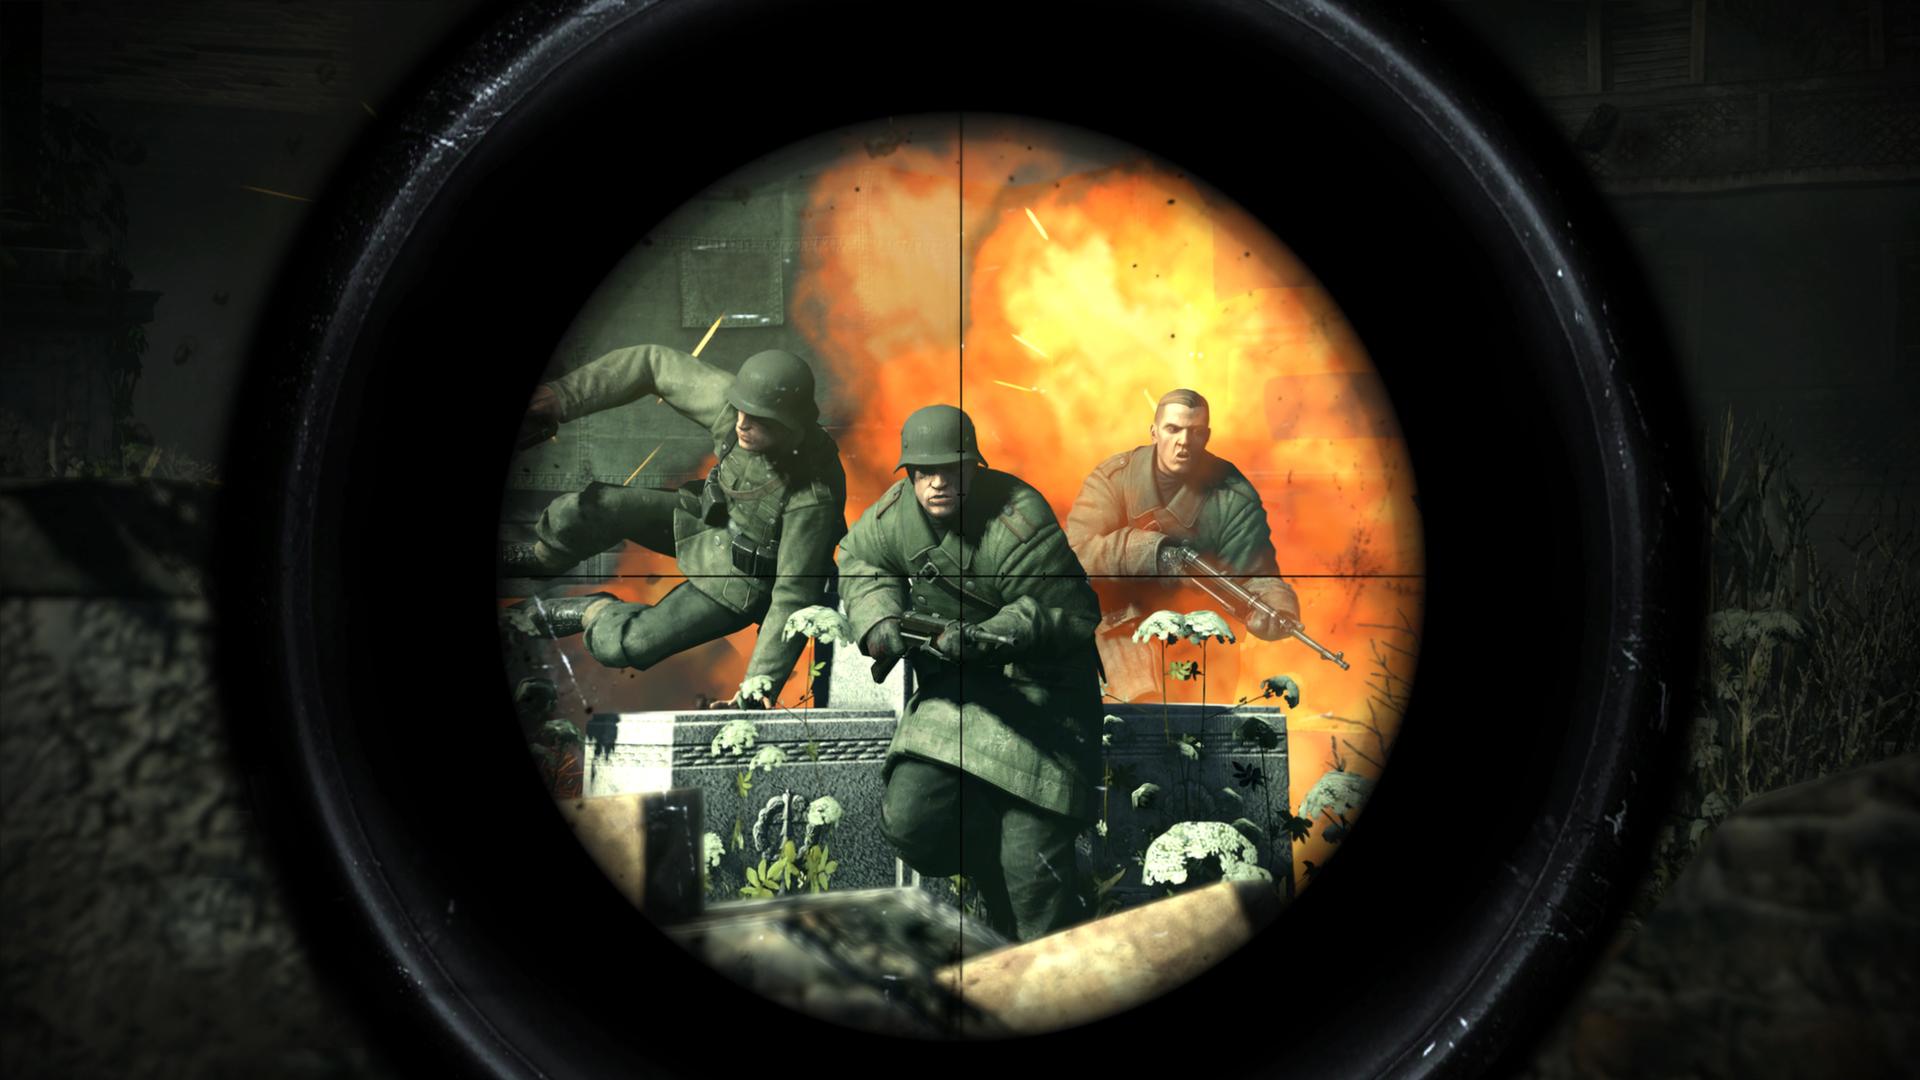 Screenshot №16 from game Sniper Elite V2